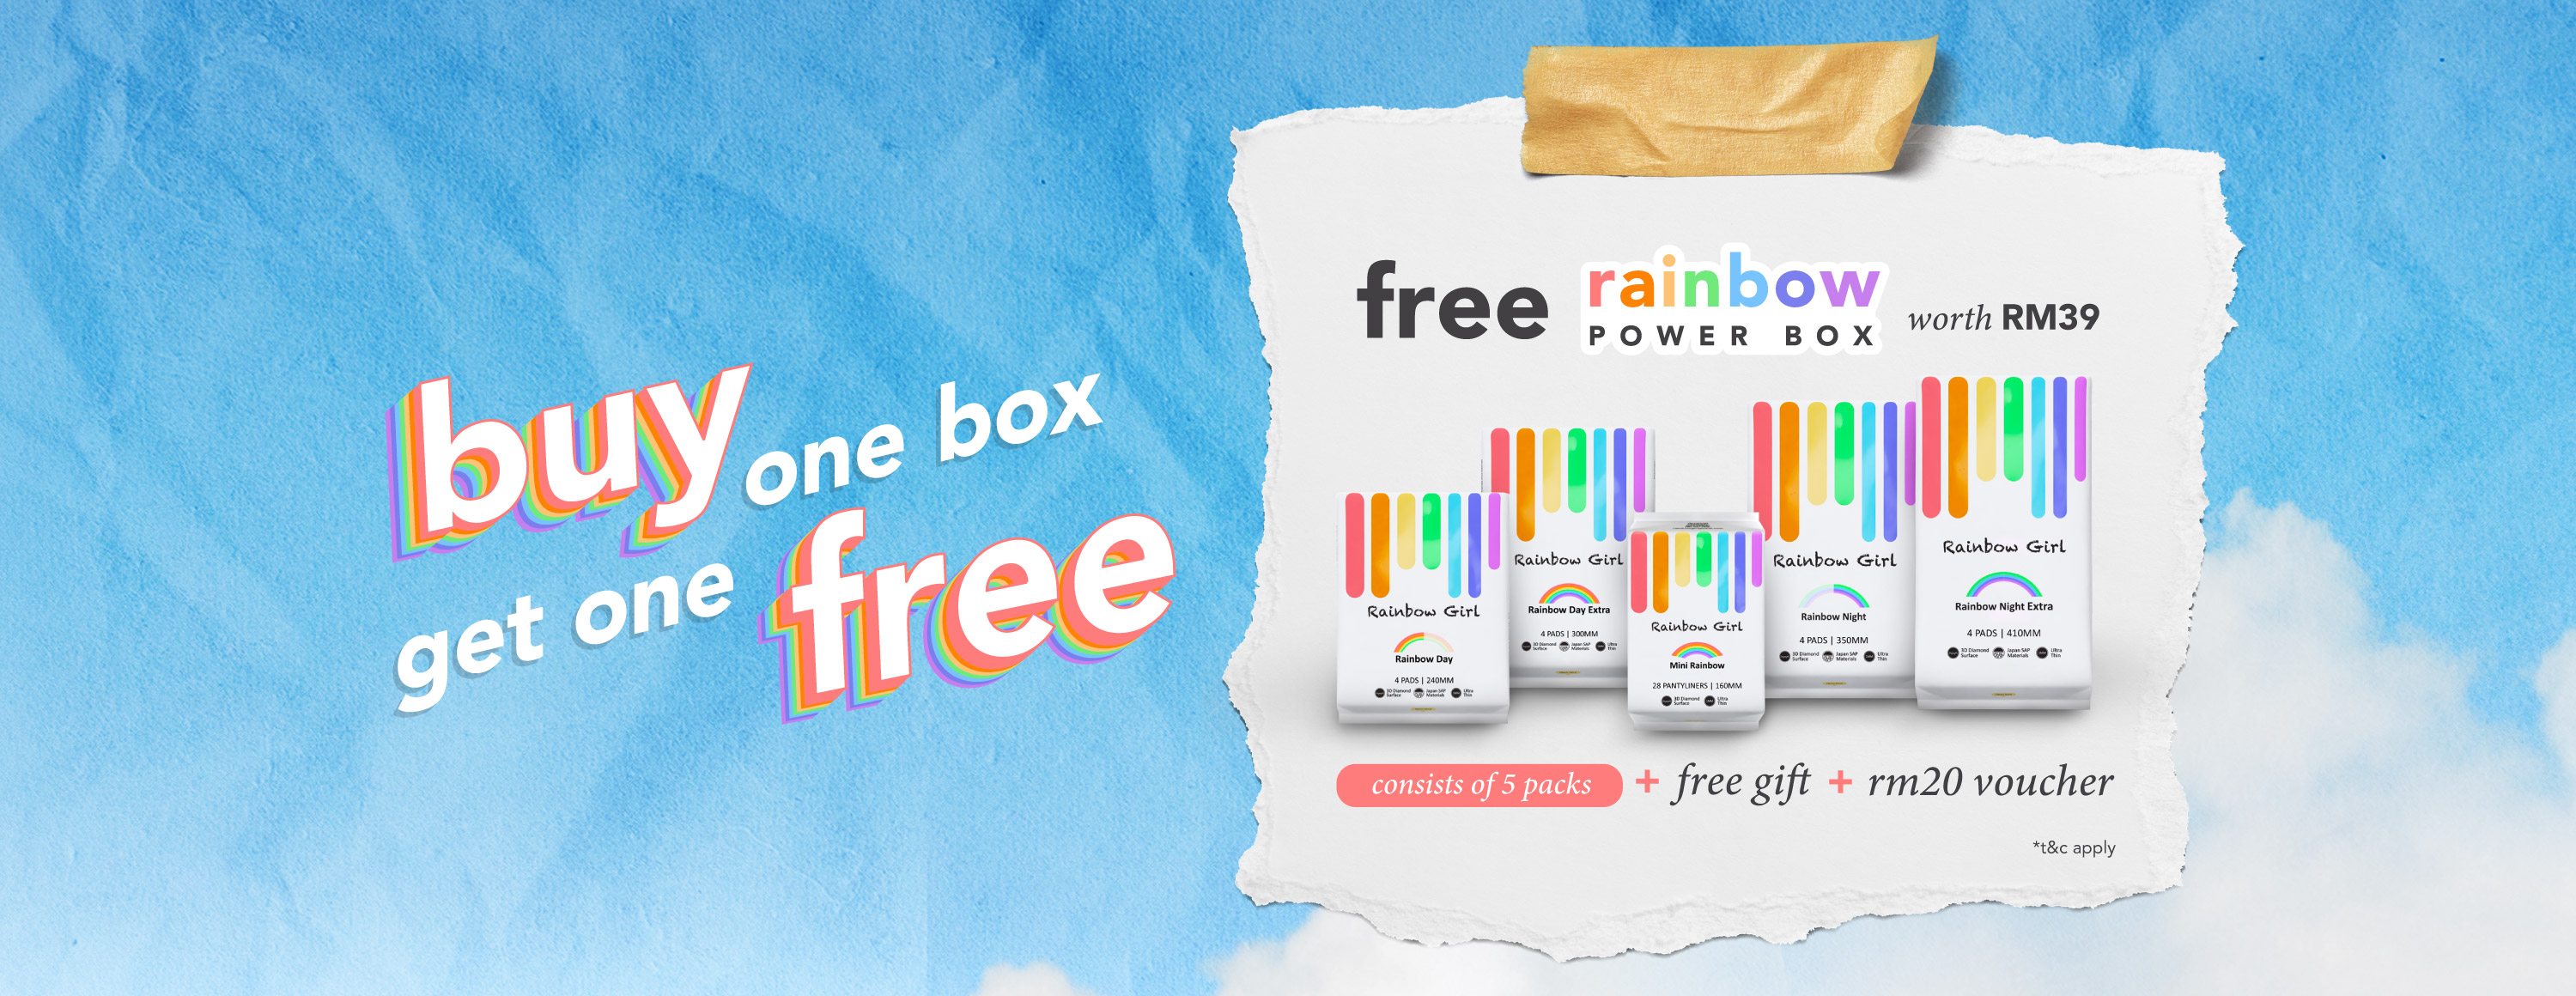 Buy 1 Get 1 Free Rainbow Power Box